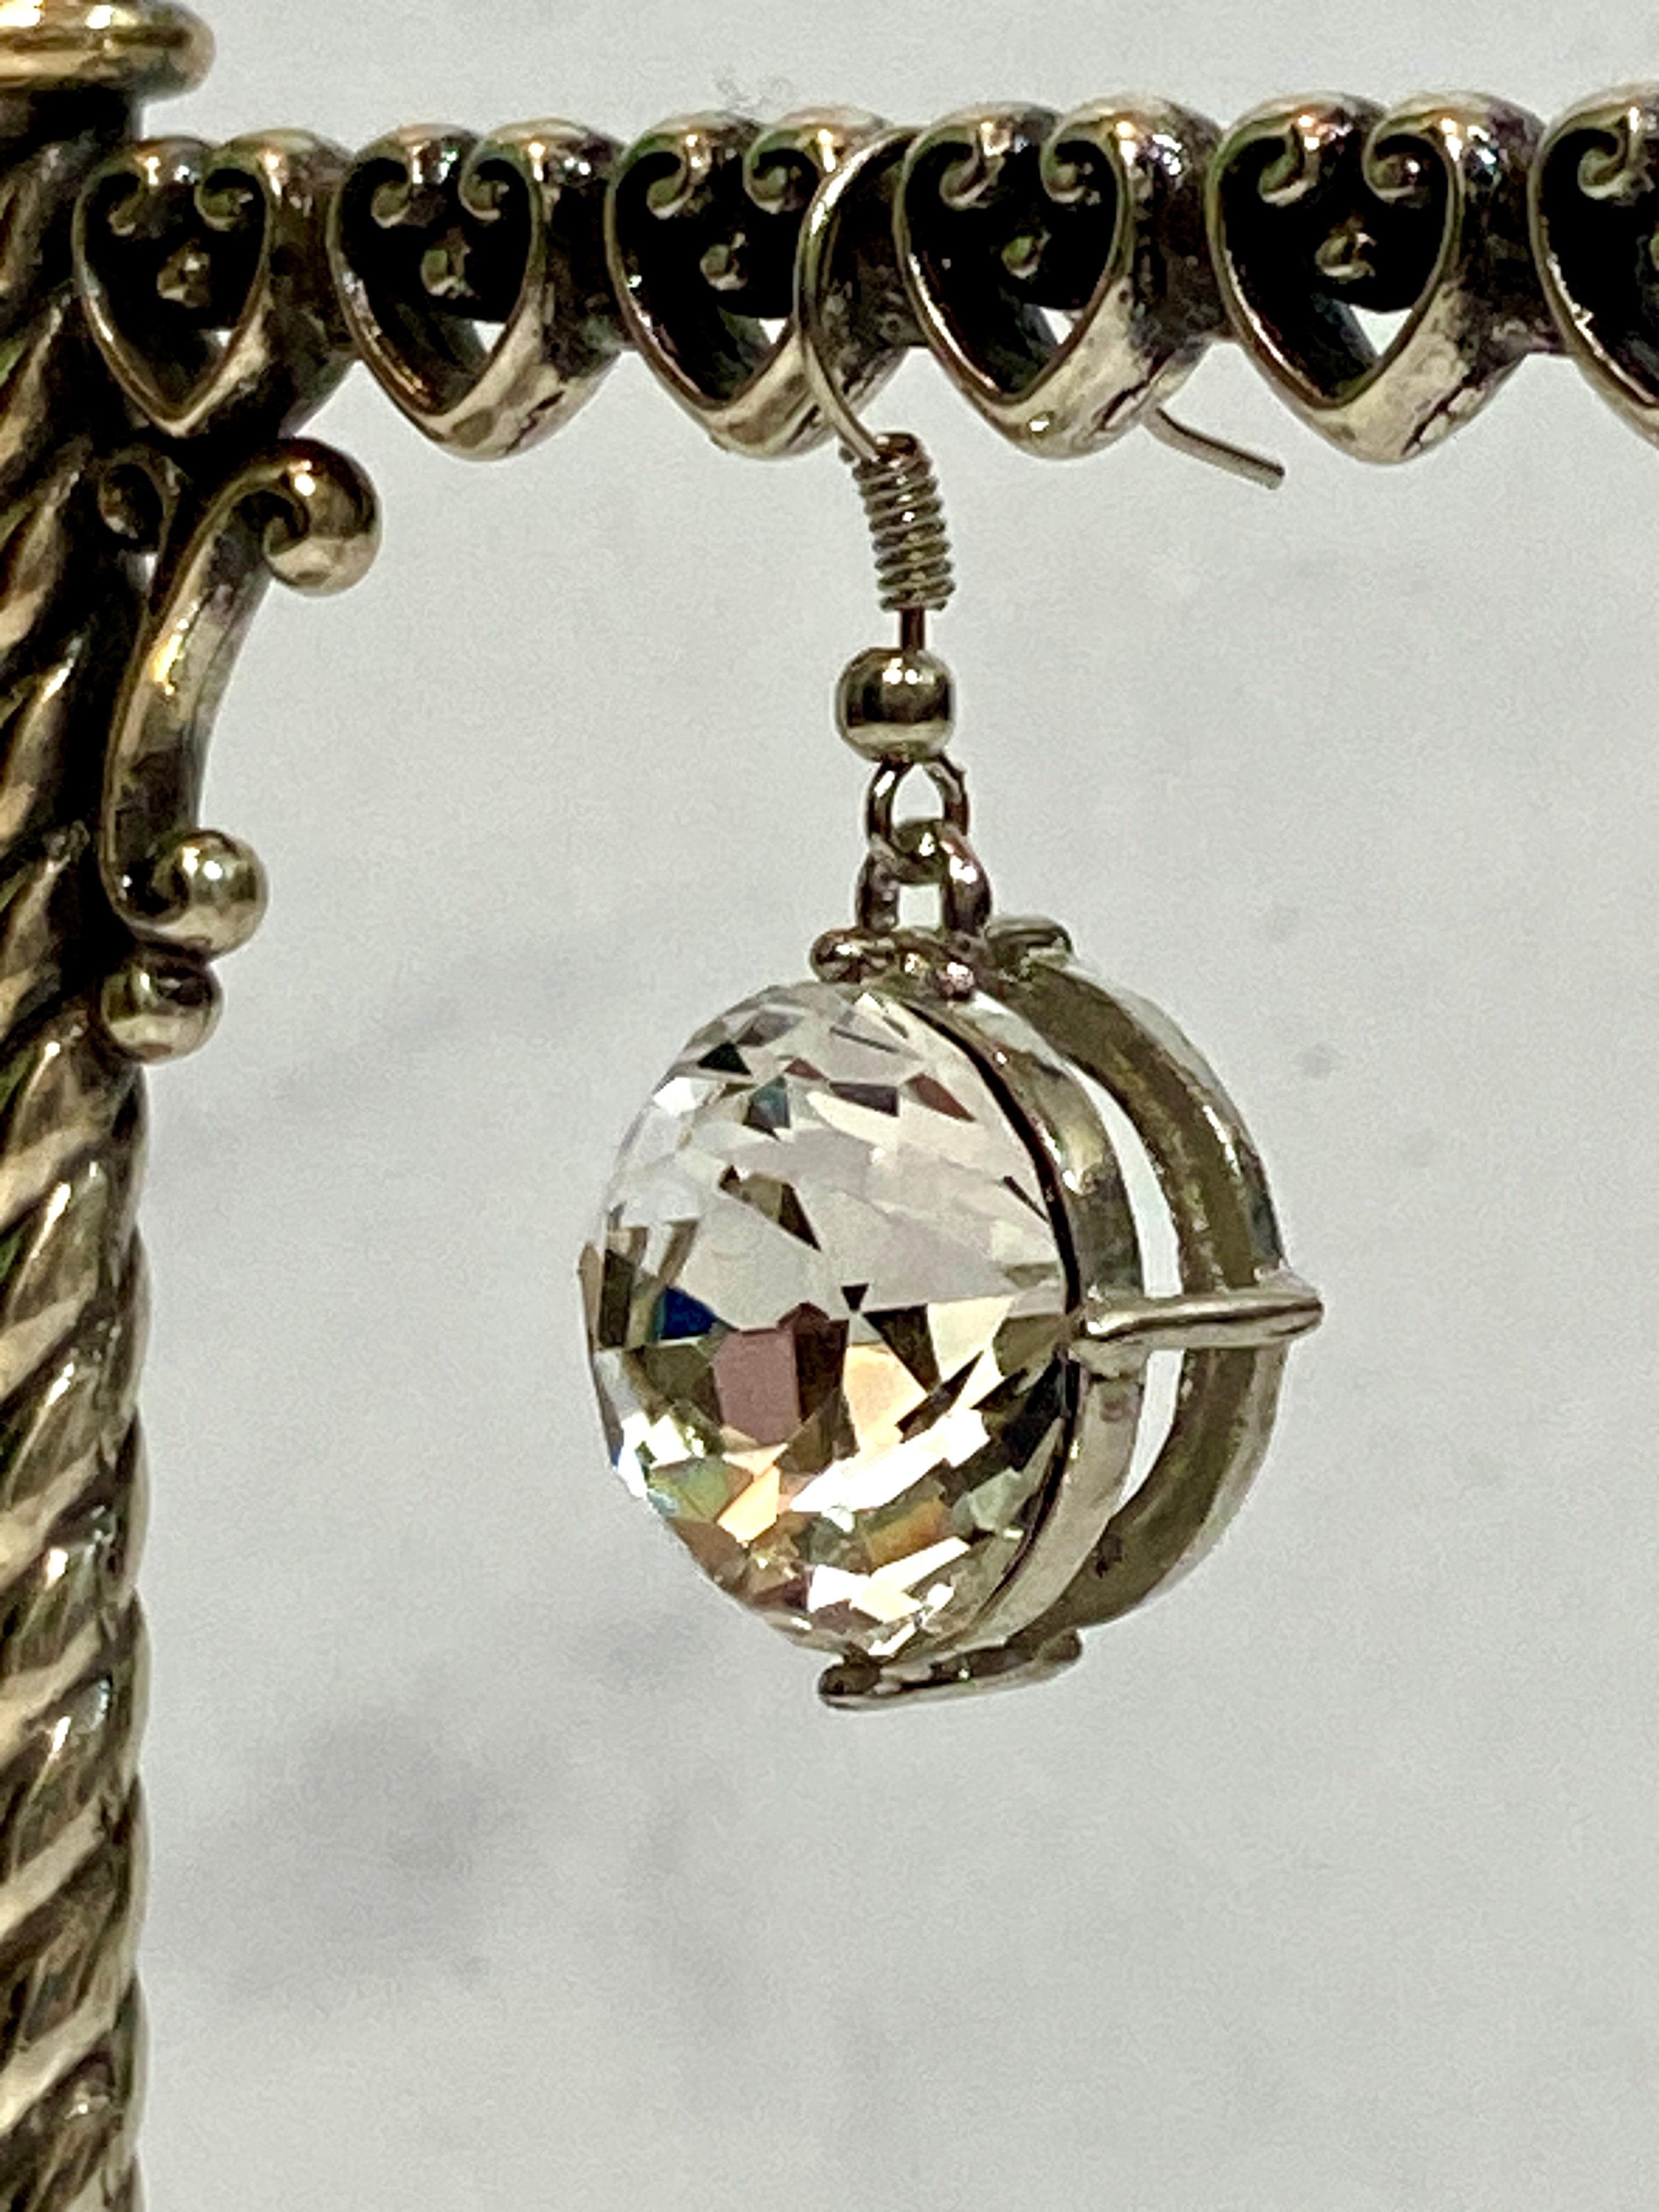 Big diamond earrings